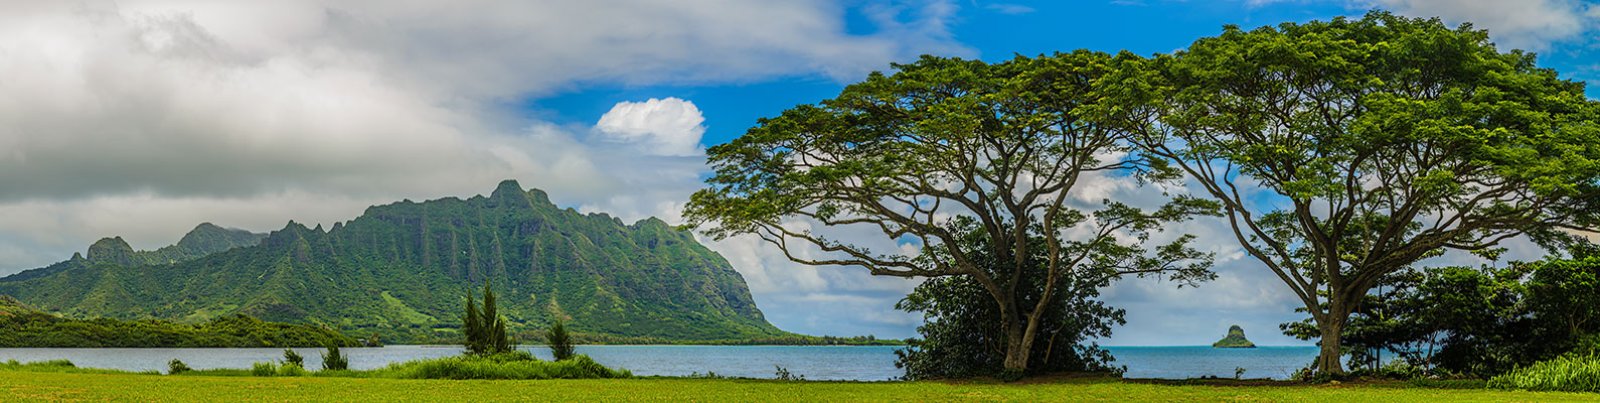 Hawaii Reopening to Visitors